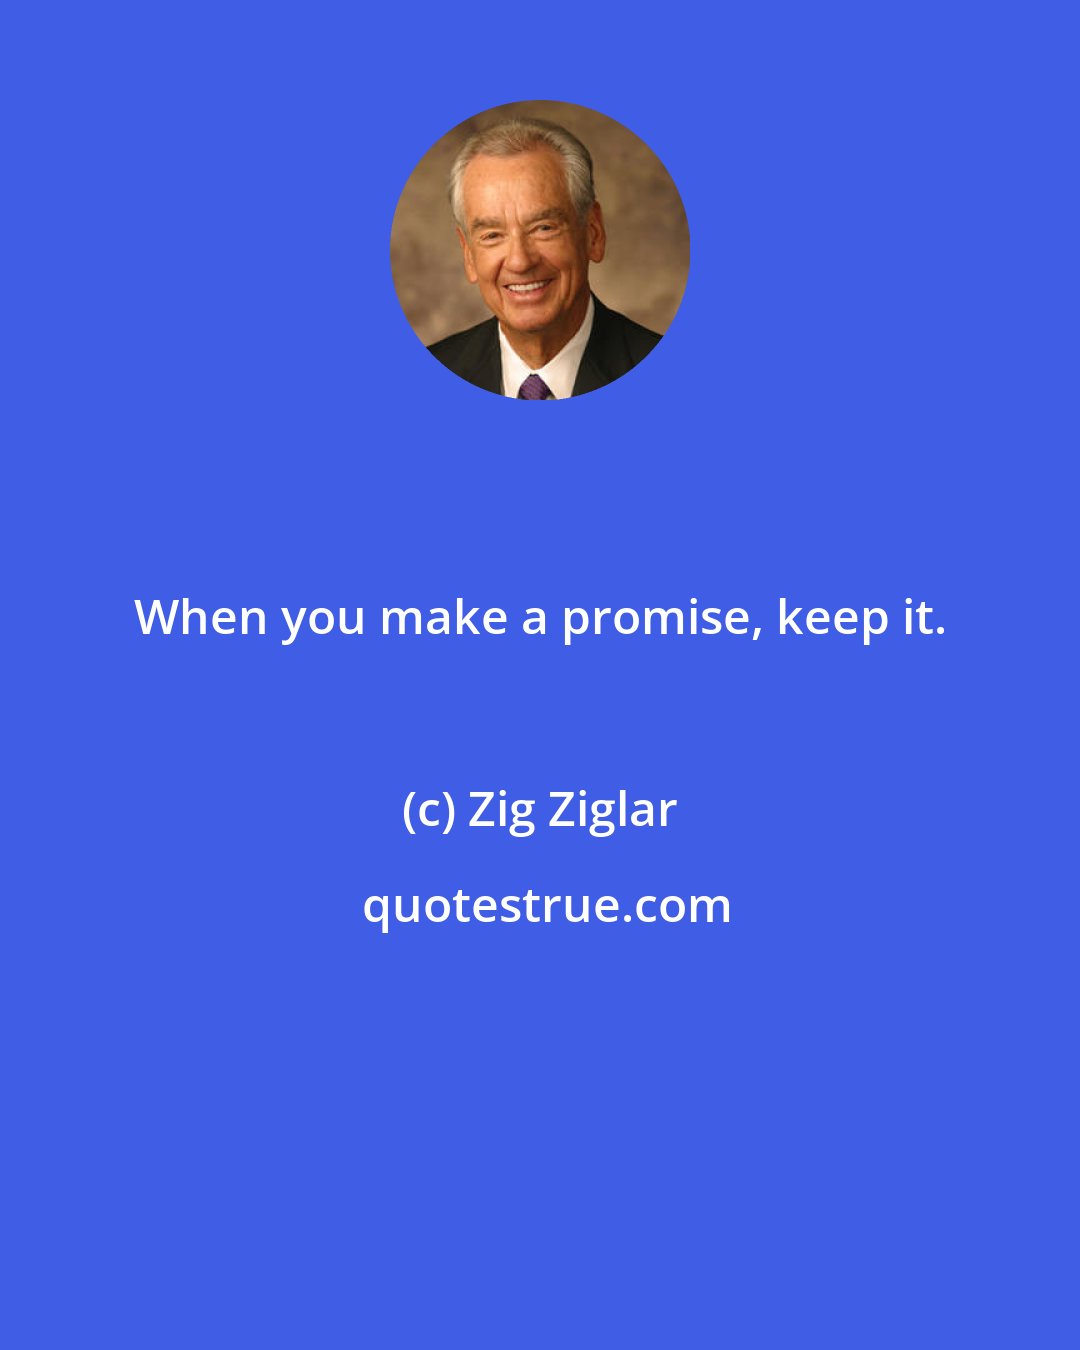 Zig Ziglar: When you make a promise, keep it.